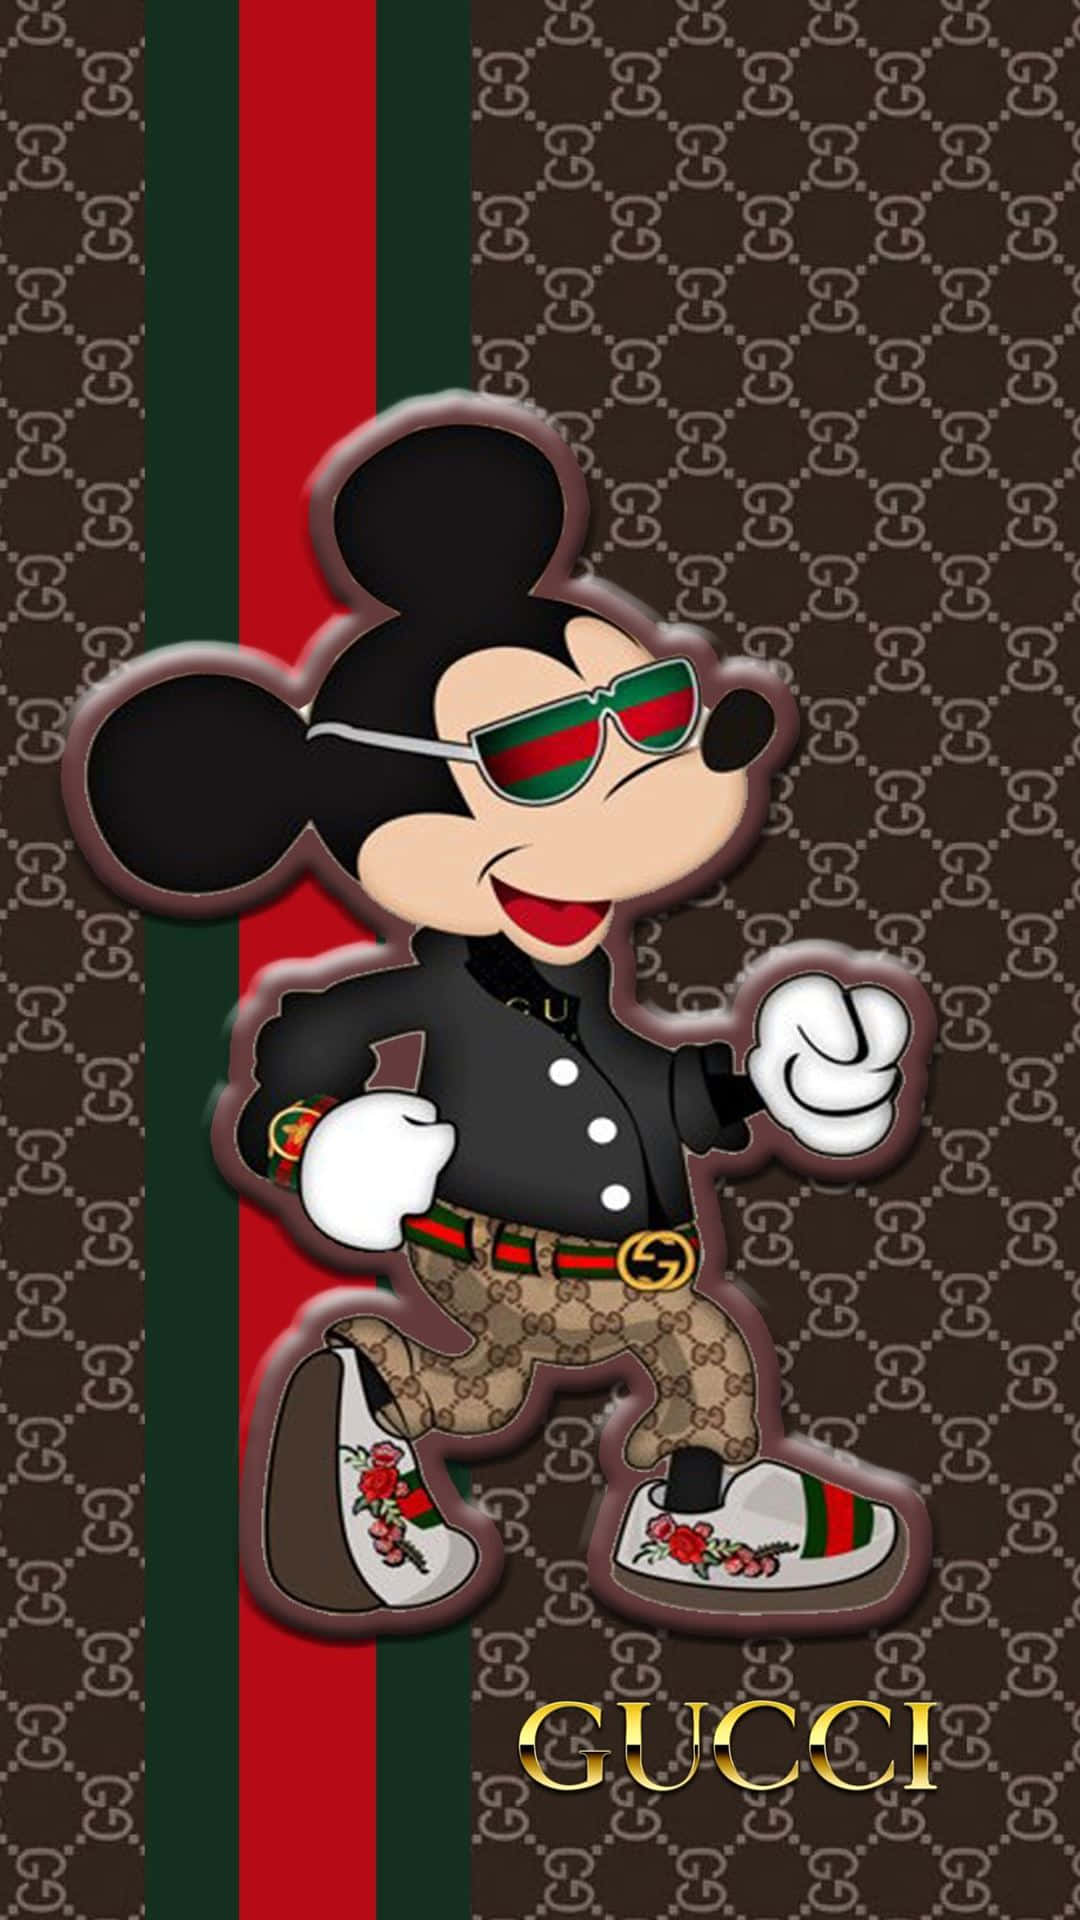 Mickey Mouse ser cool ud mens han har det sjovt Wallpaper